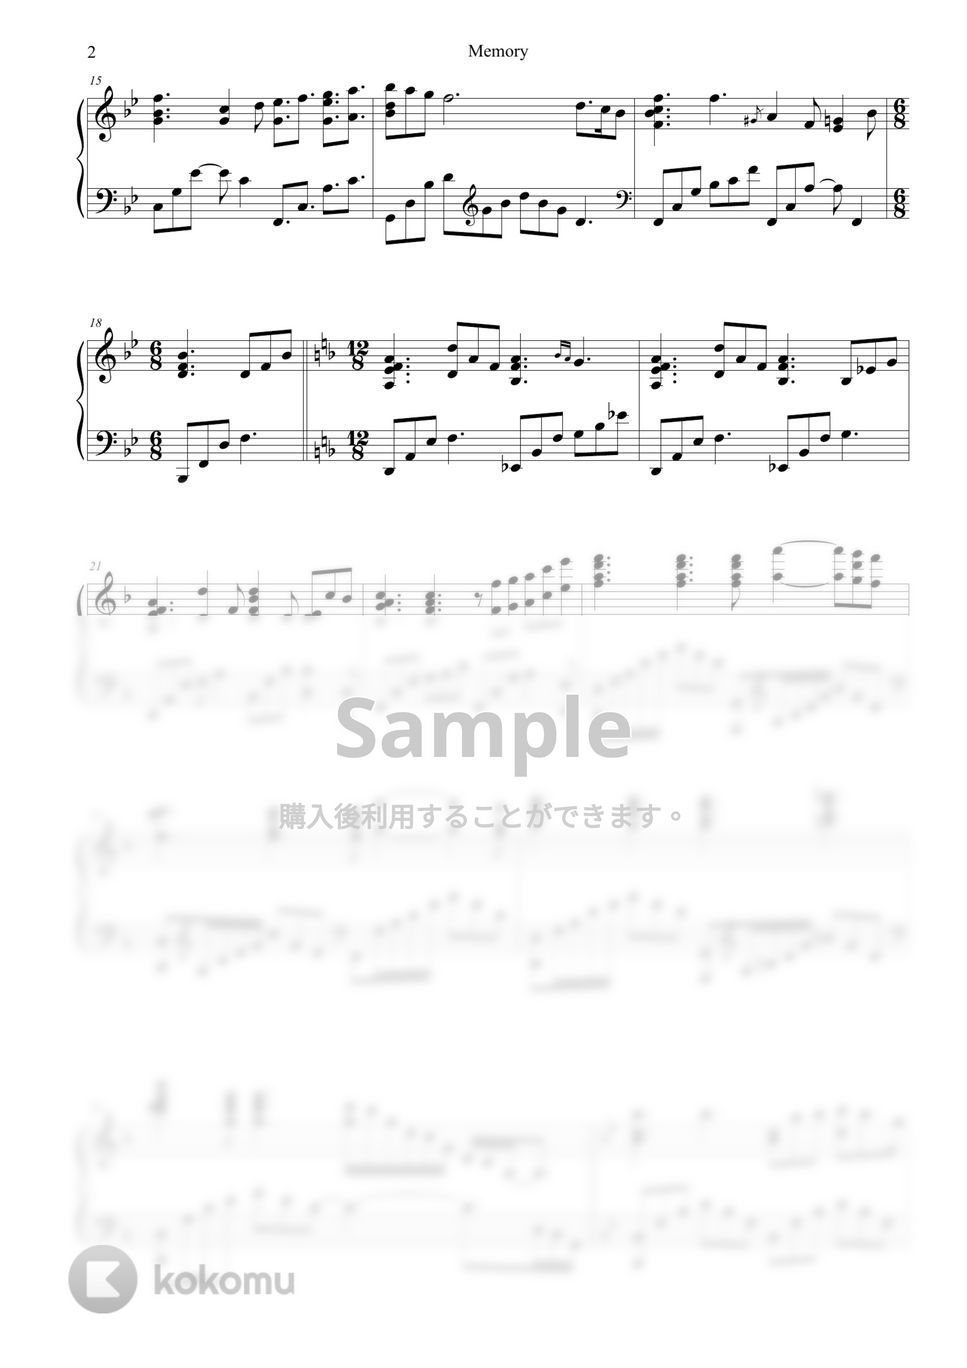 Andrew Lloyd Webber - Memory(Musical Cats OST) by sora Hong